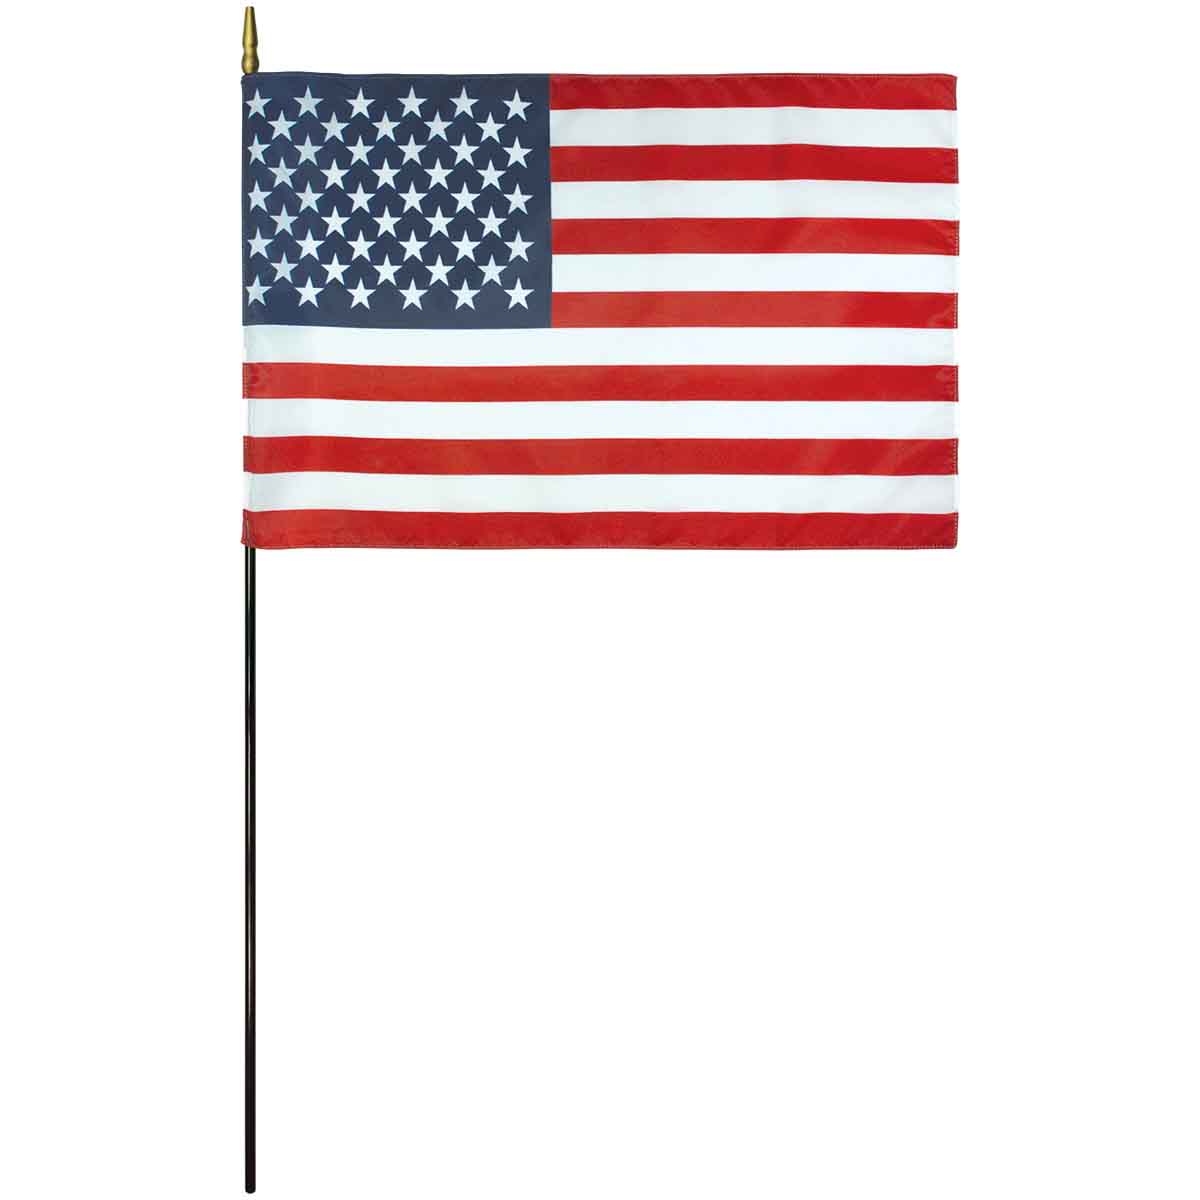 US Mounted Flag